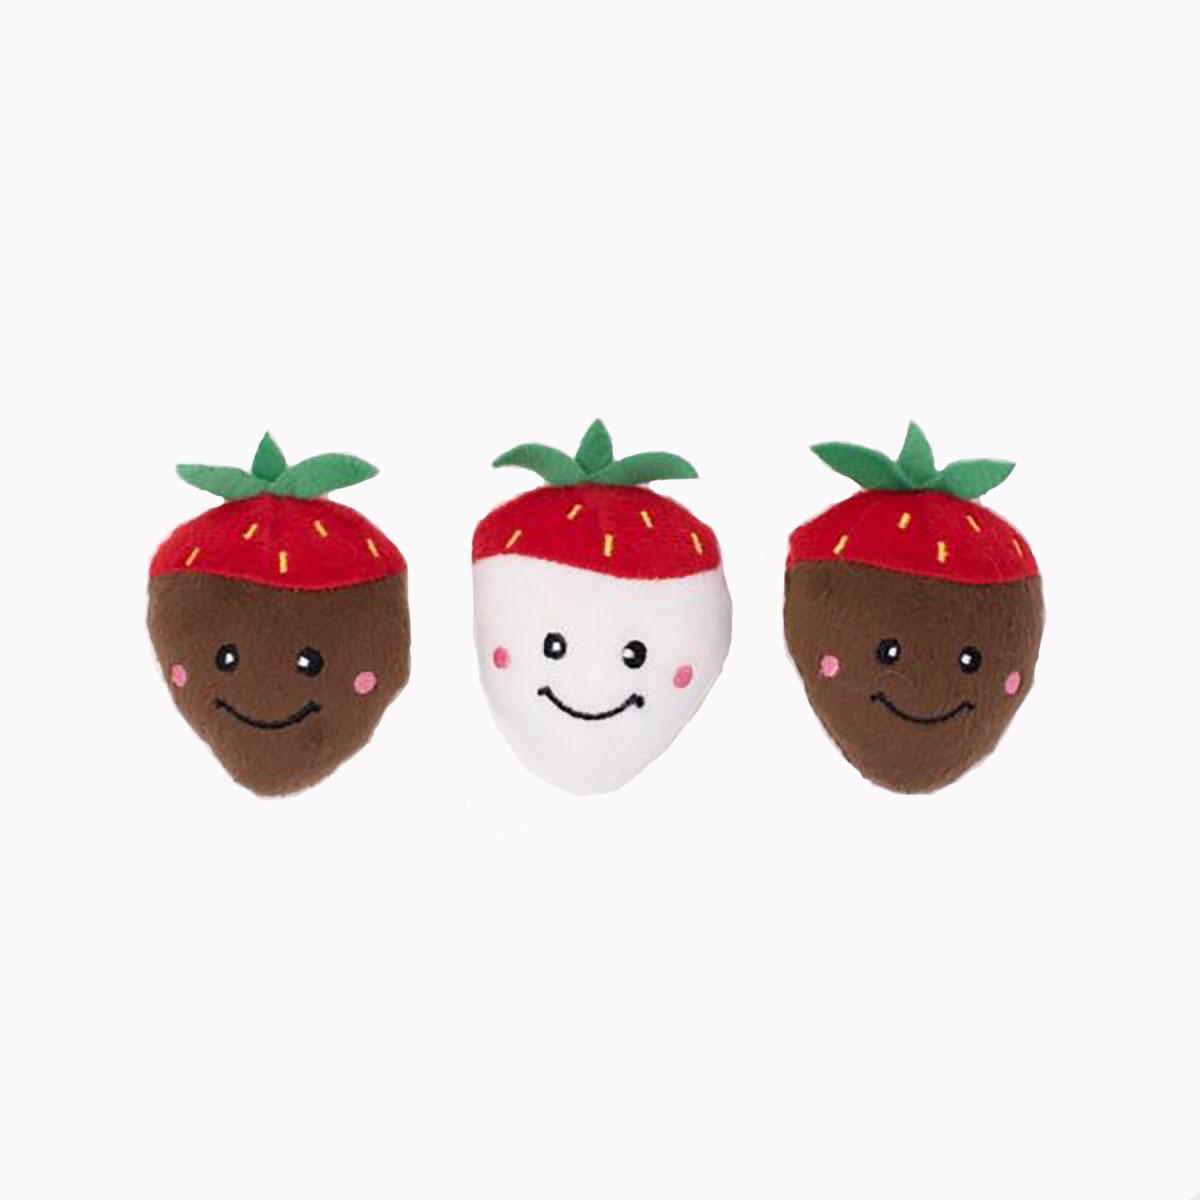 ZippyPaws Valentine's Miniz Dog Toys - Chocolate Covered Strawberries